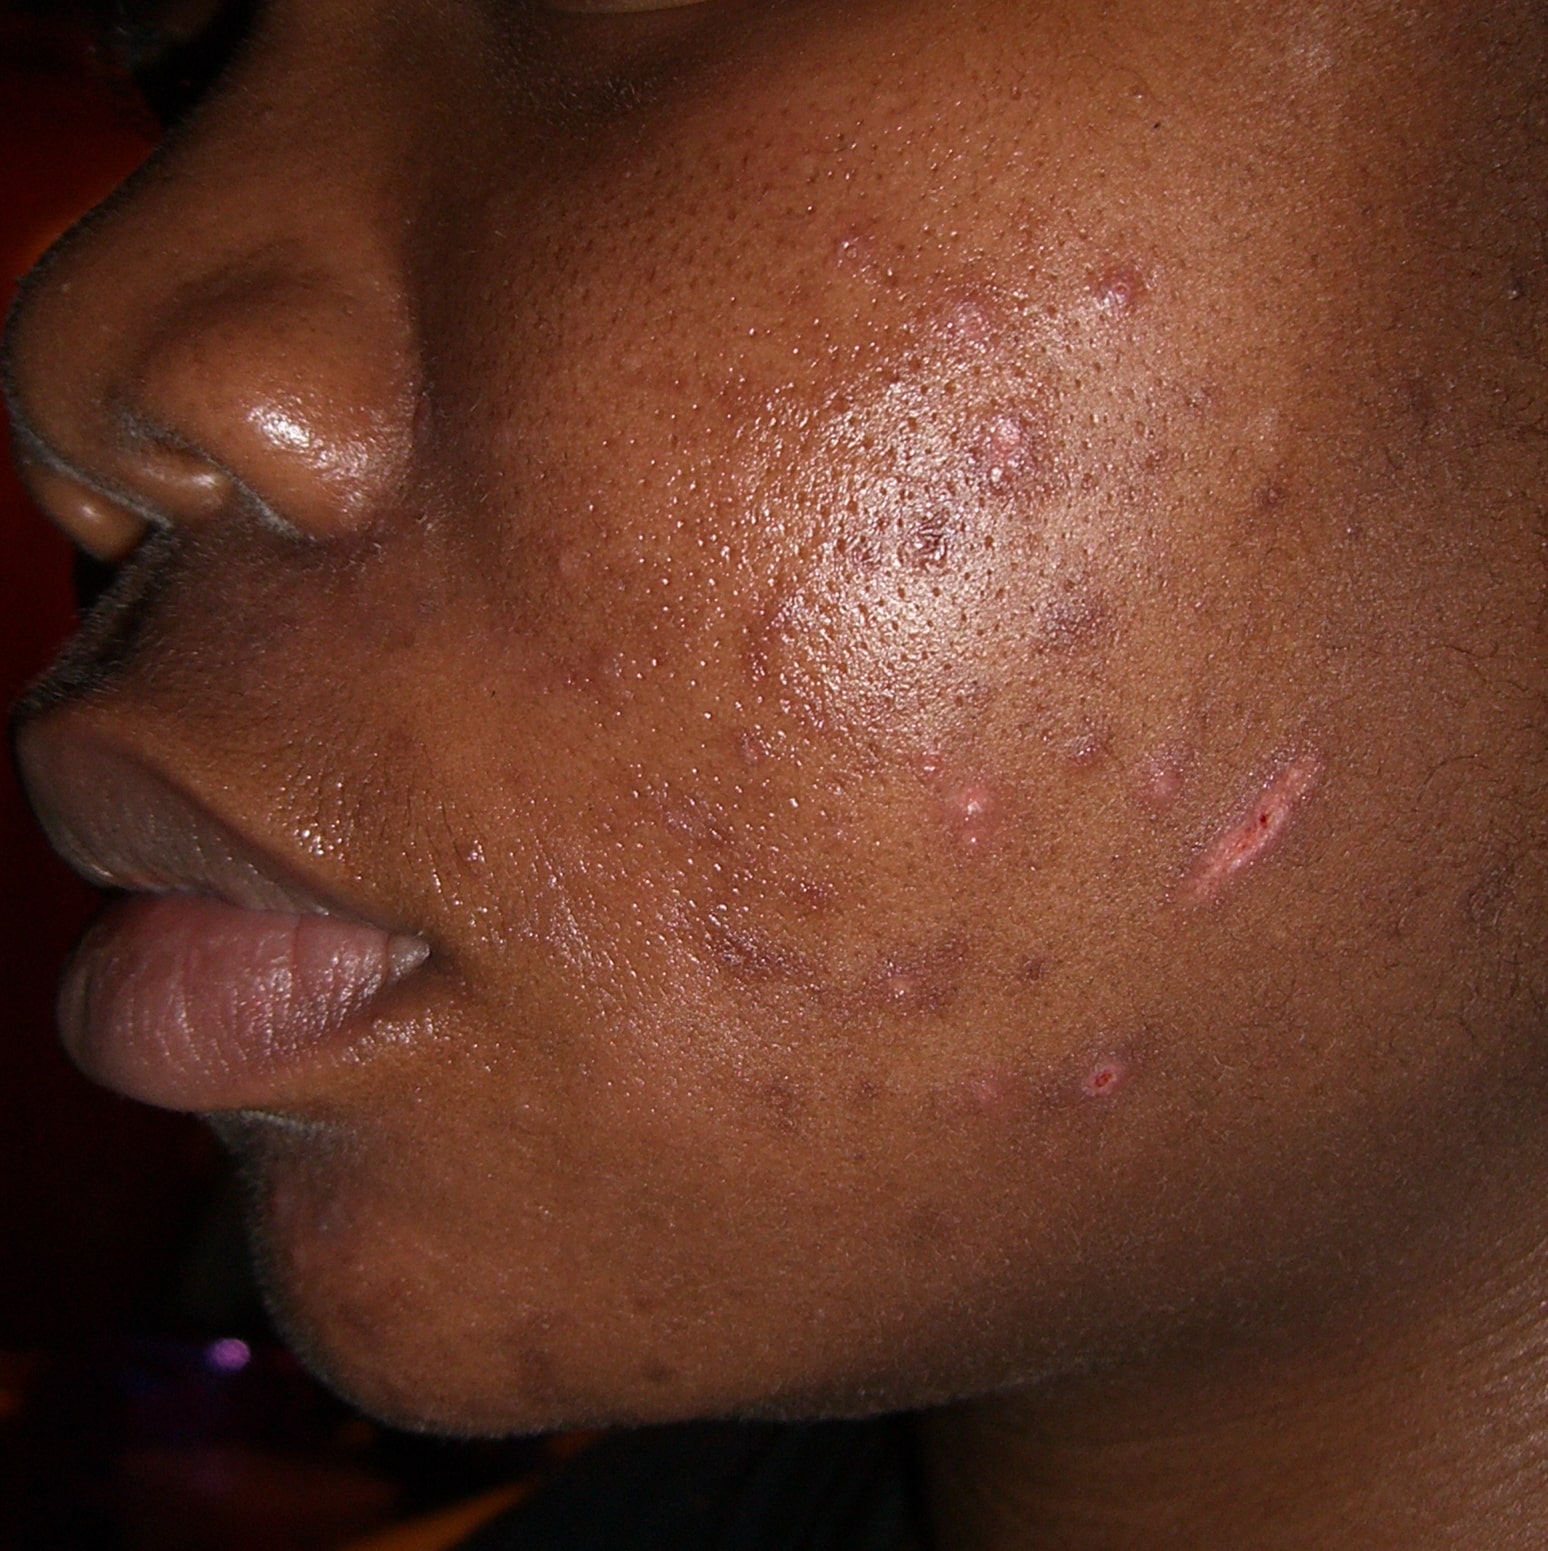 black rash on skin